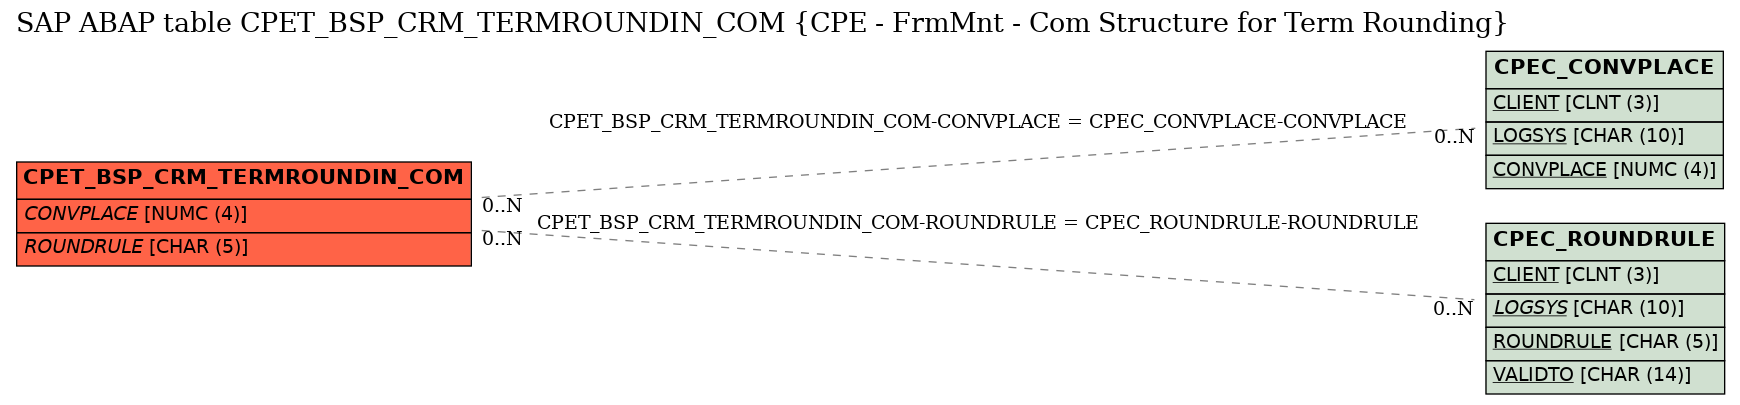 E-R Diagram for table CPET_BSP_CRM_TERMROUNDIN_COM (CPE - FrmMnt - Com Structure for Term Rounding)